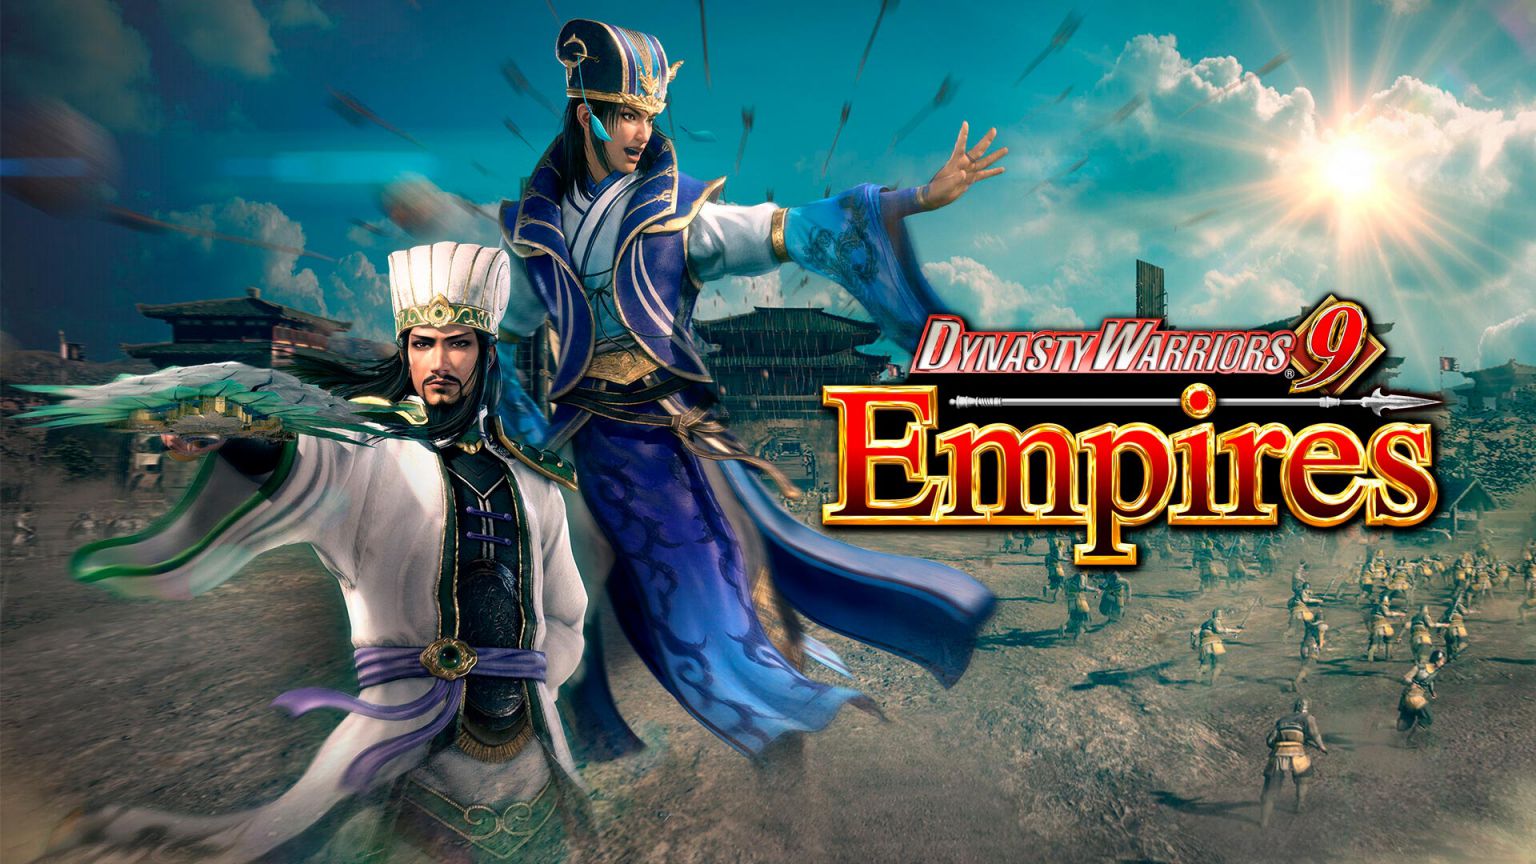 Dinasty Warriors 9 Empires